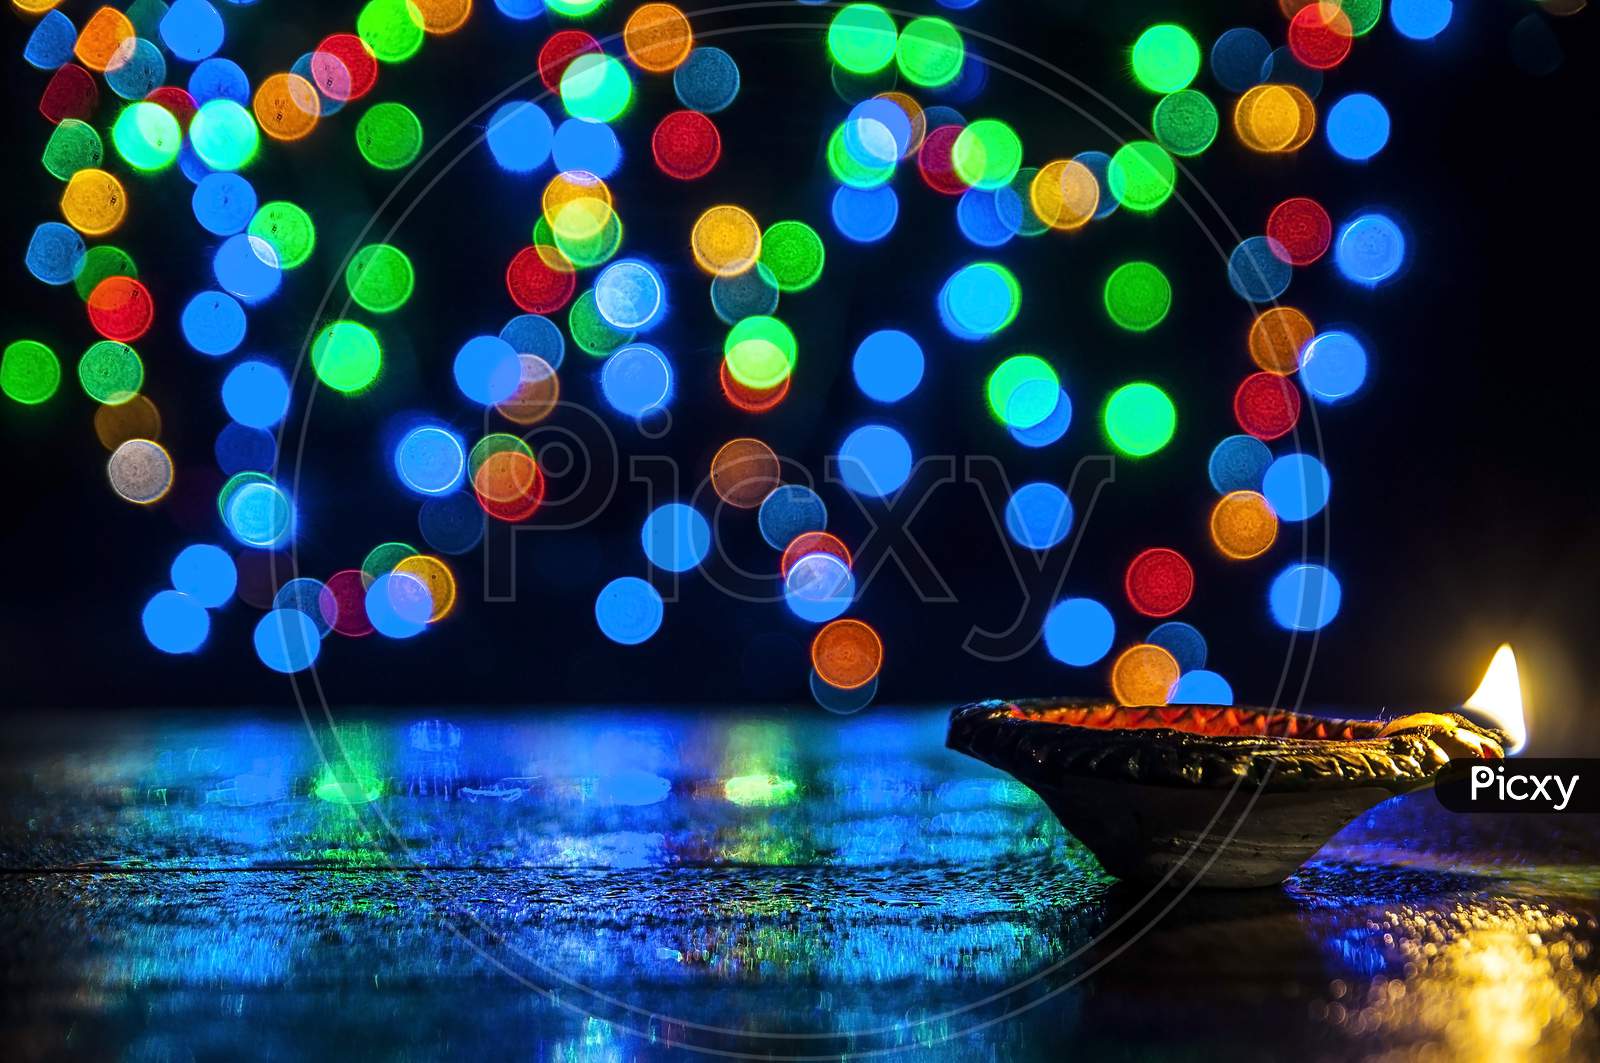 The multi colored festive lighting.